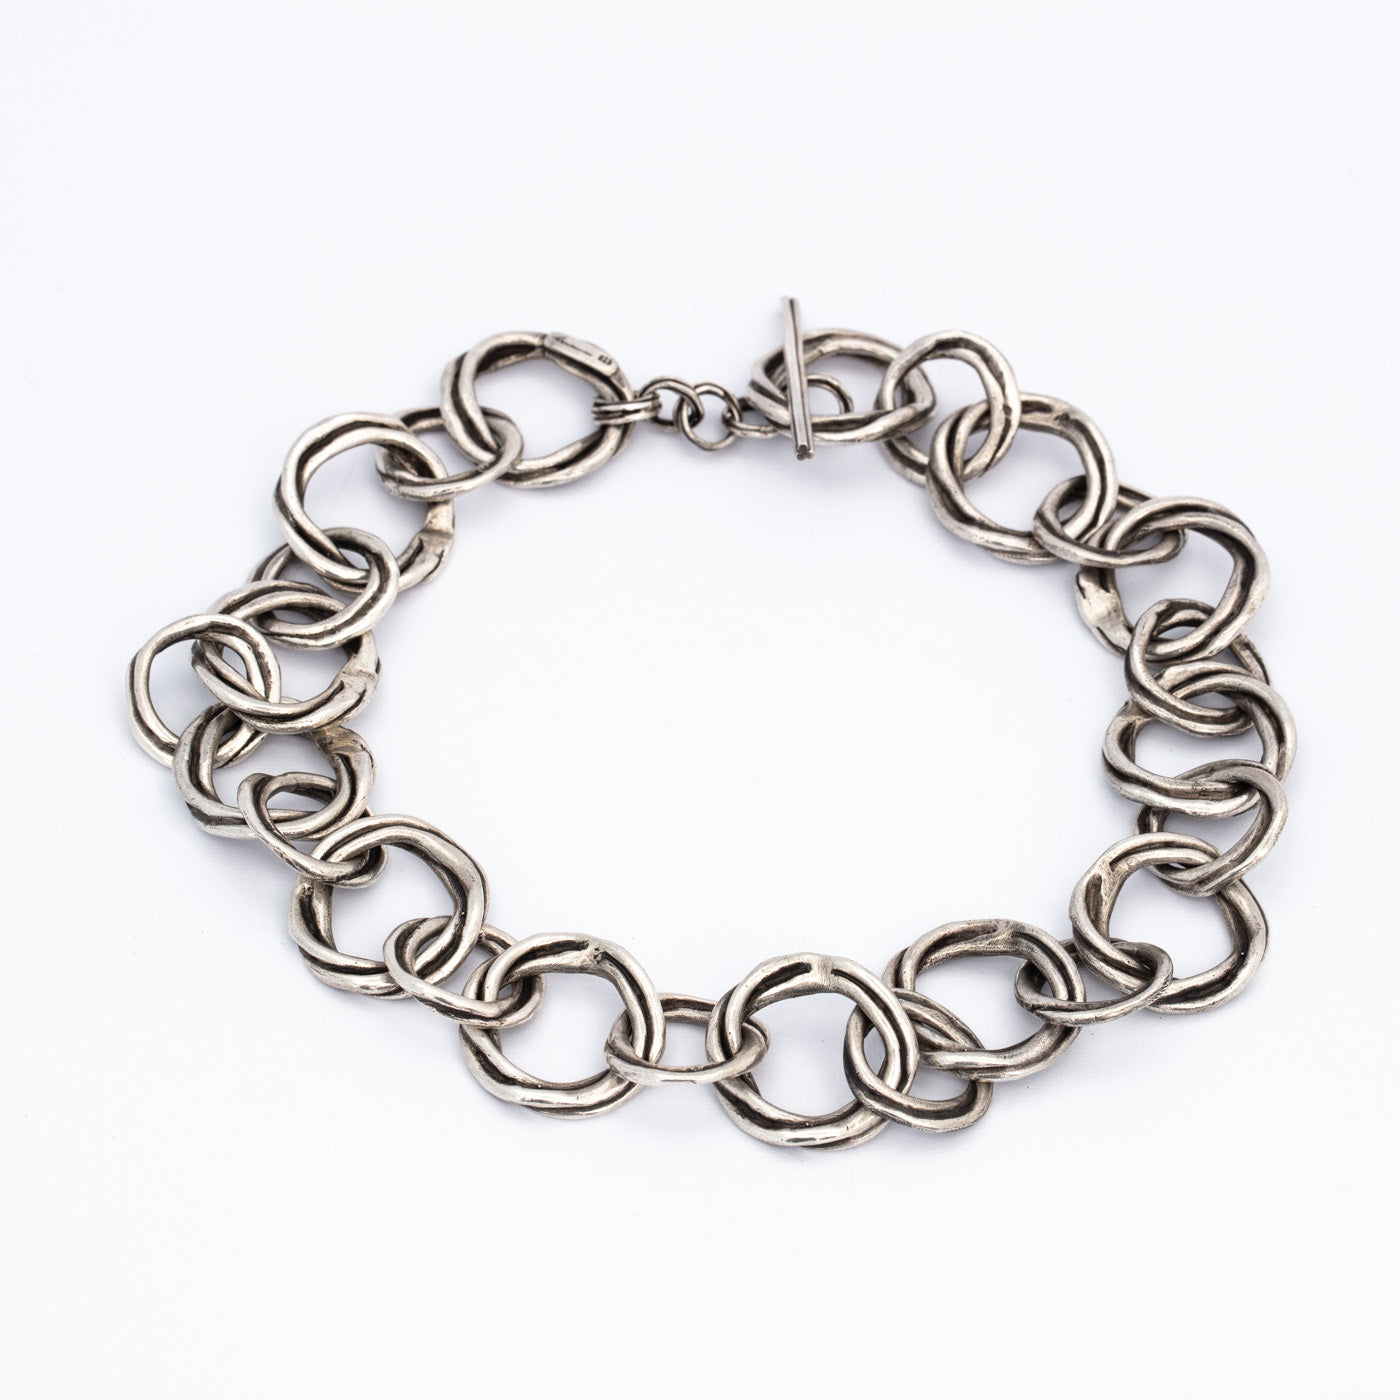 Necklace choker Flow 1 sterling silver product image innan jewellery berlin